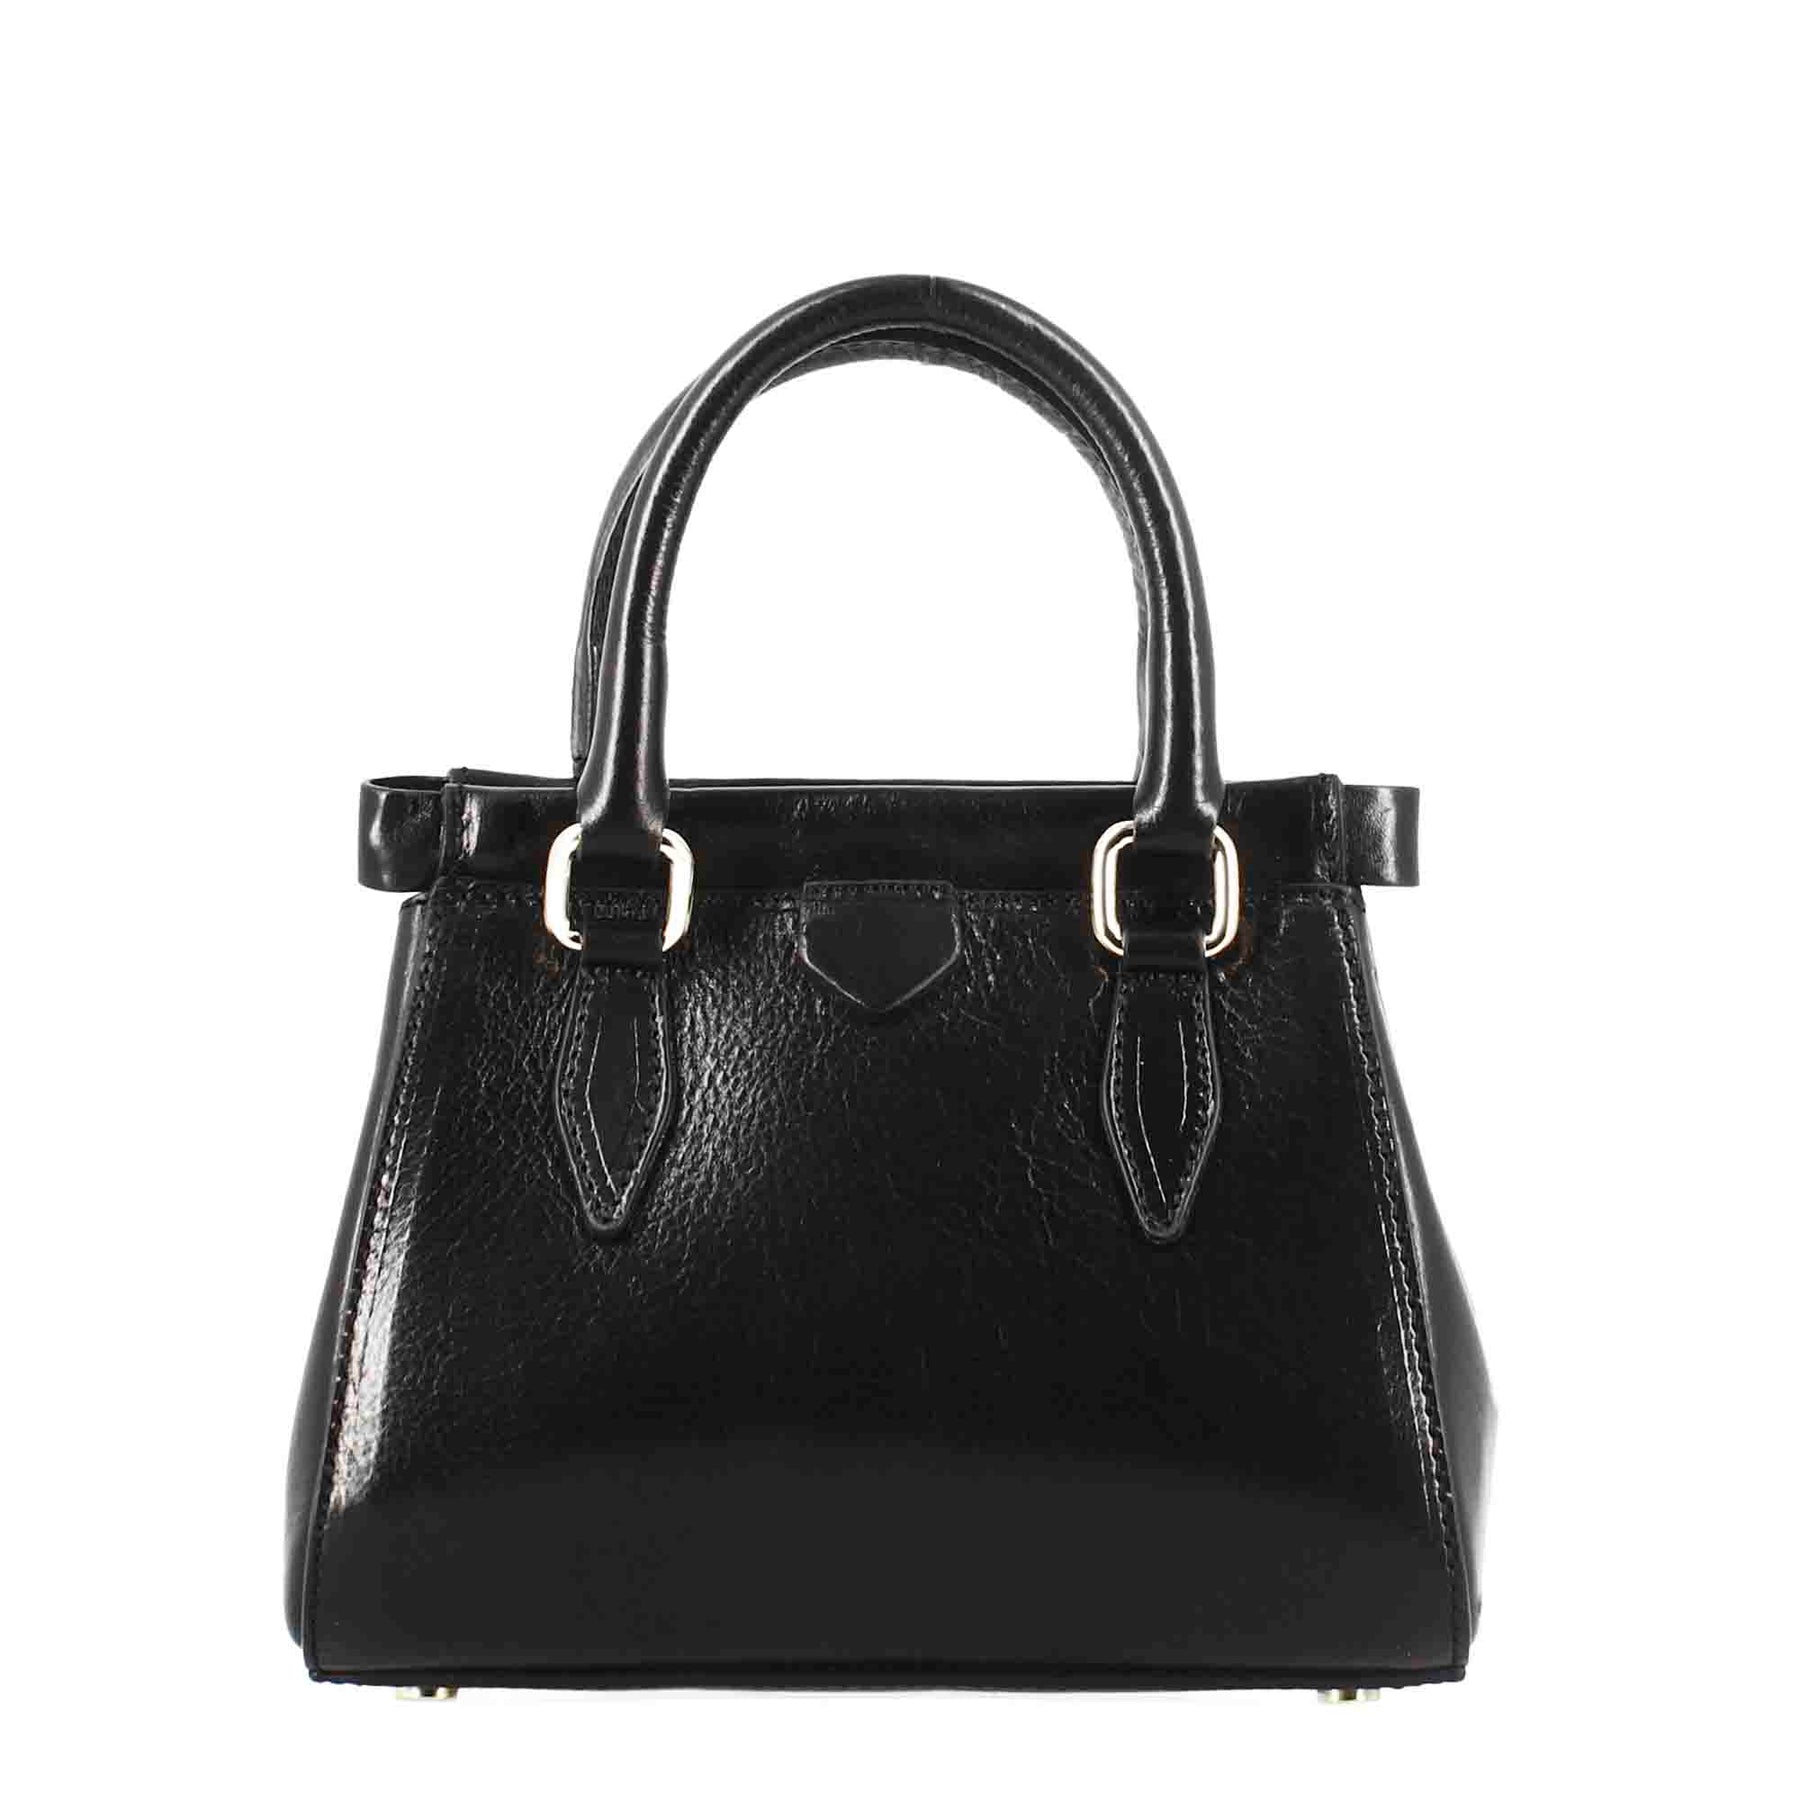 Fiorenza leather handbag with removable black shoulder strap